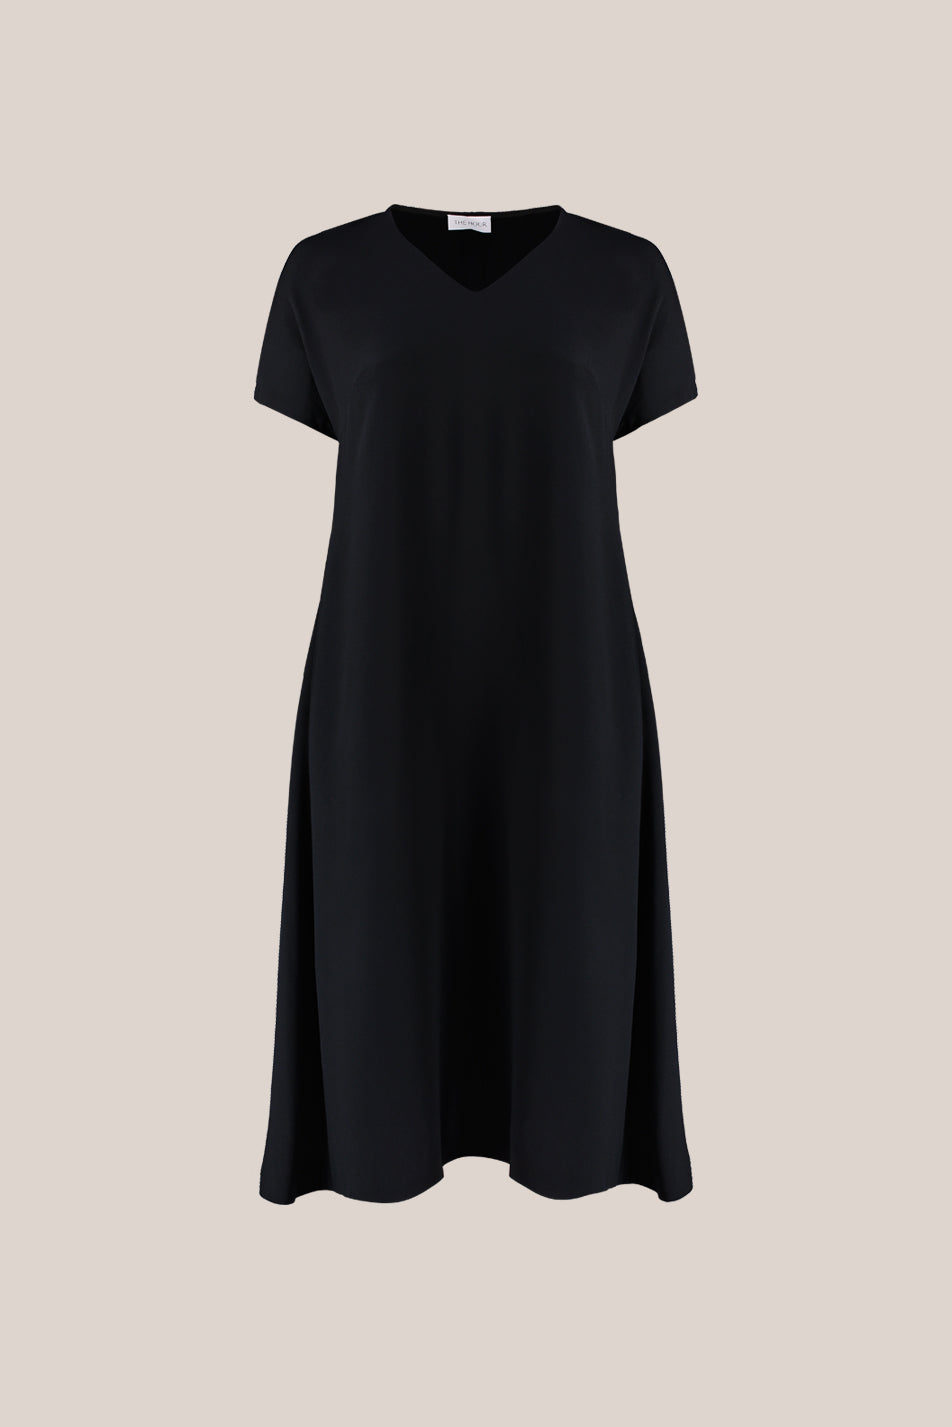 Designer Plus size short sleeve crepe satin midi black dress with pockets